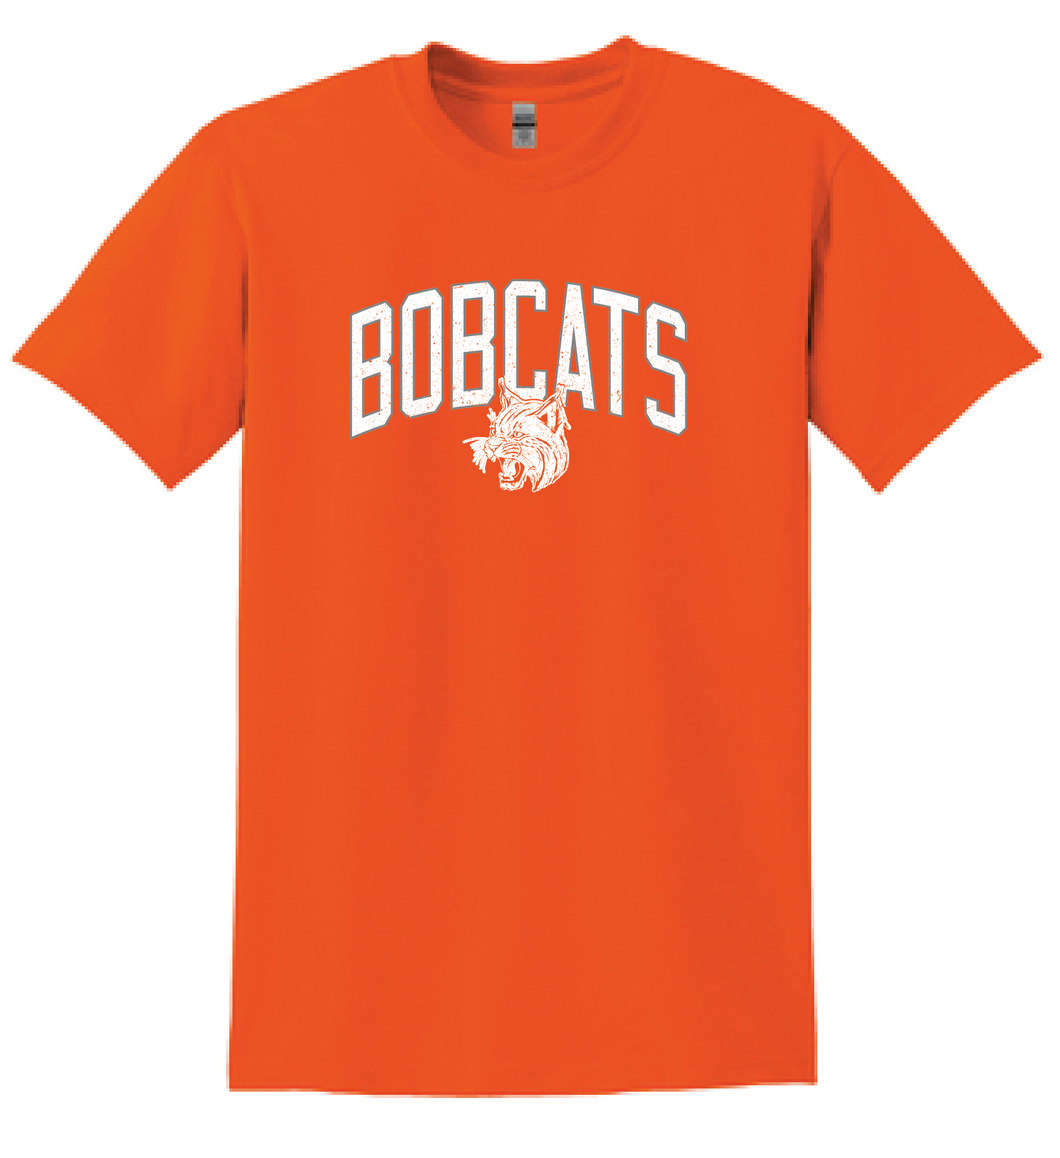 Bobcats Arc